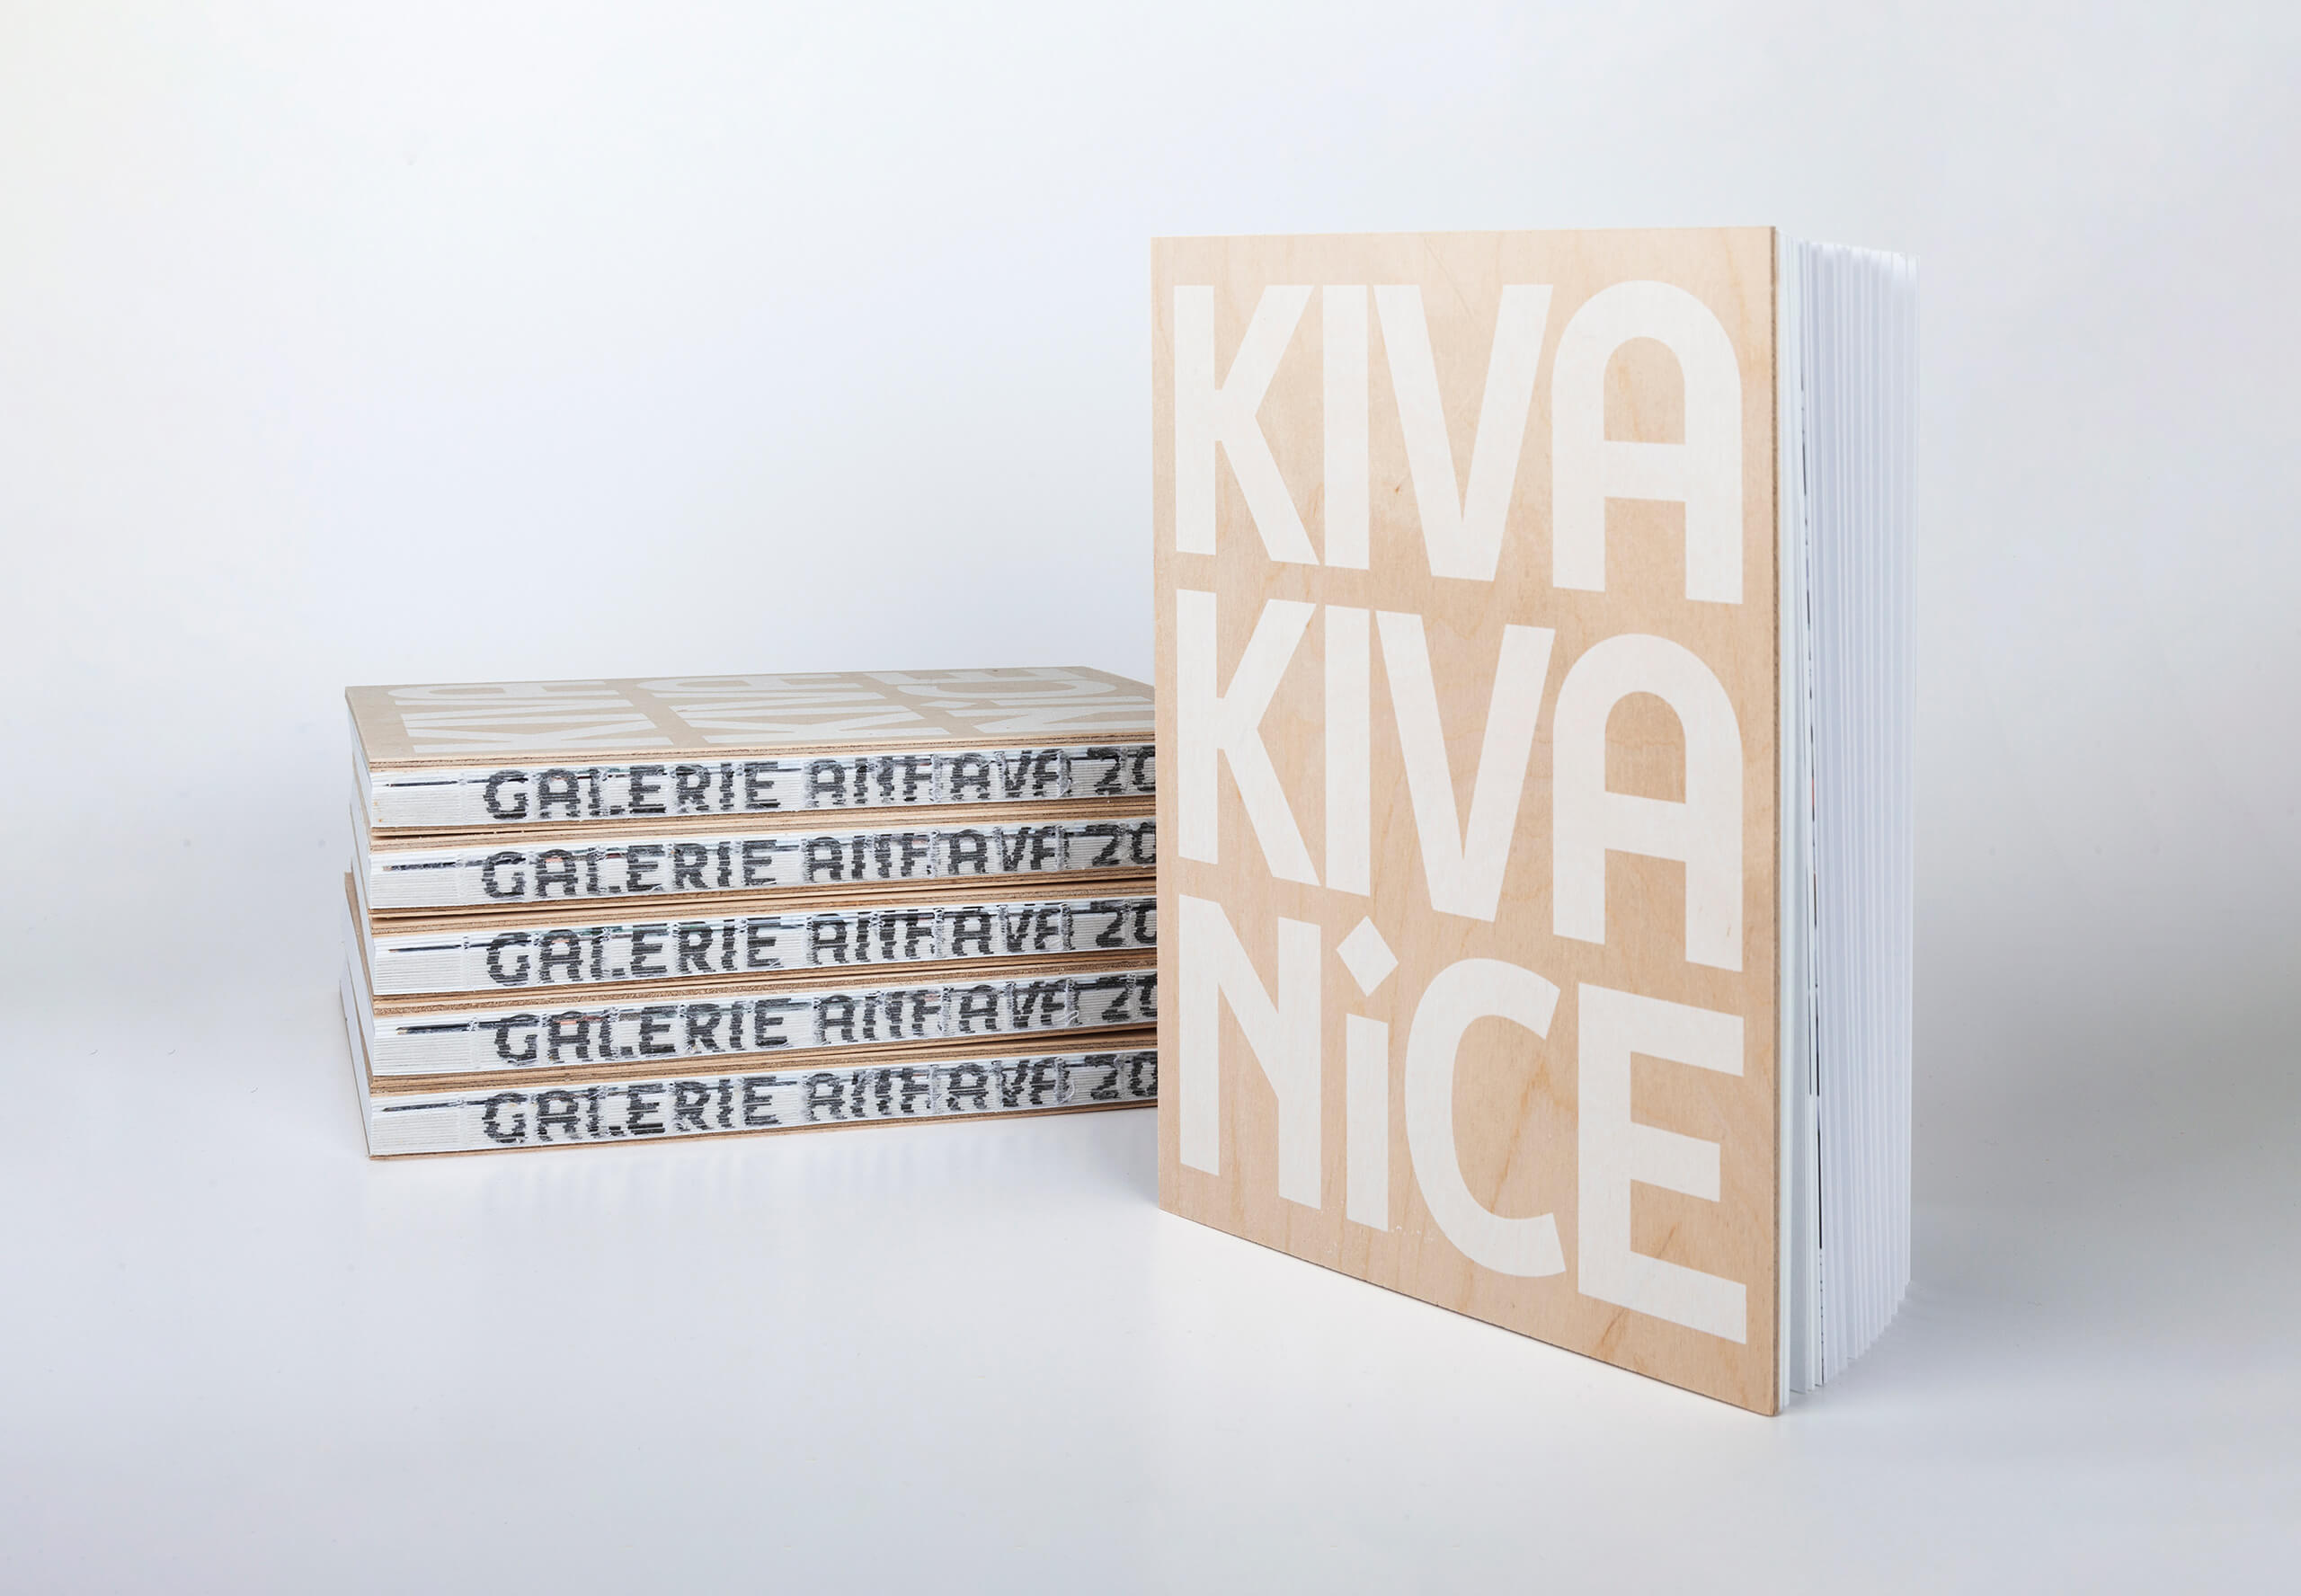 galerie-anhava-20-anniversary-art-book-plywood2560